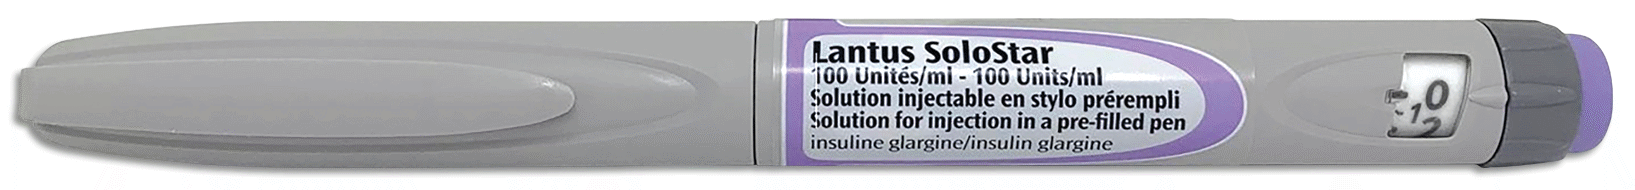 /thailand/image/info/lantus soln for inj 100 u-ml/100 units-ml?id=233f9f94-fc5c-463c-bff3-b01200c36314